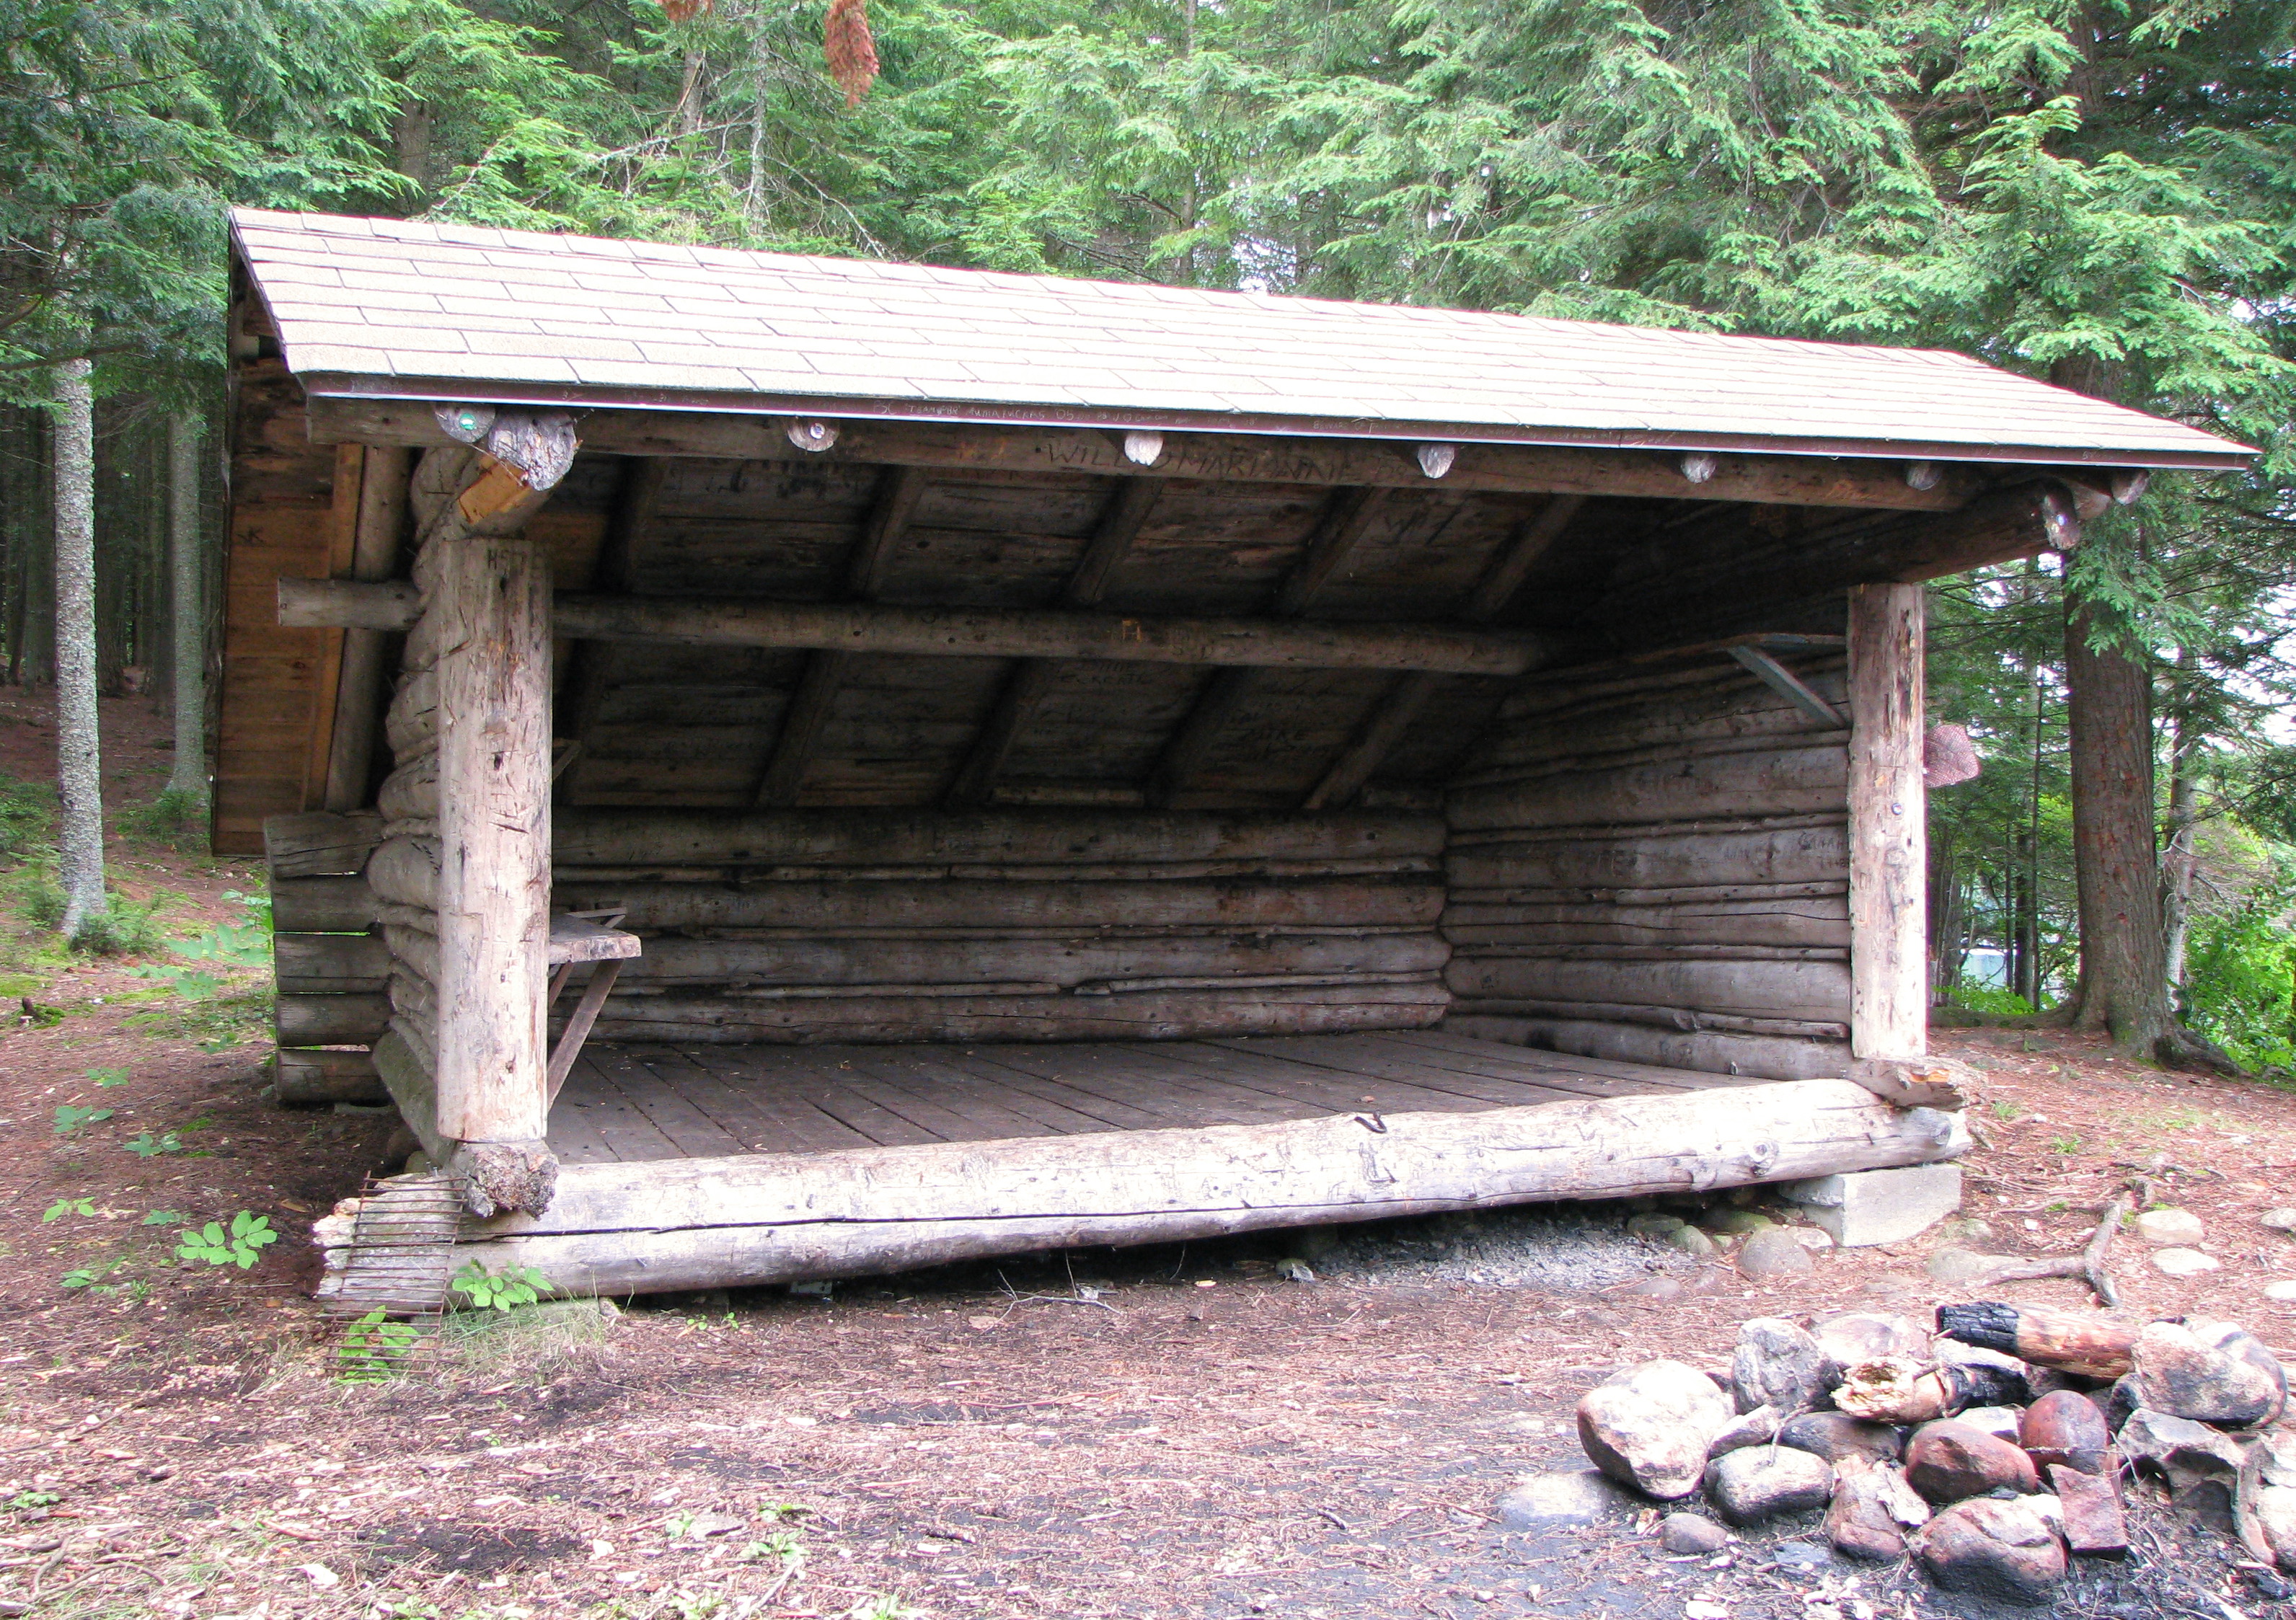 File:Adirondack Lean-to.jpg - Wikipedia, the free encyclopedia